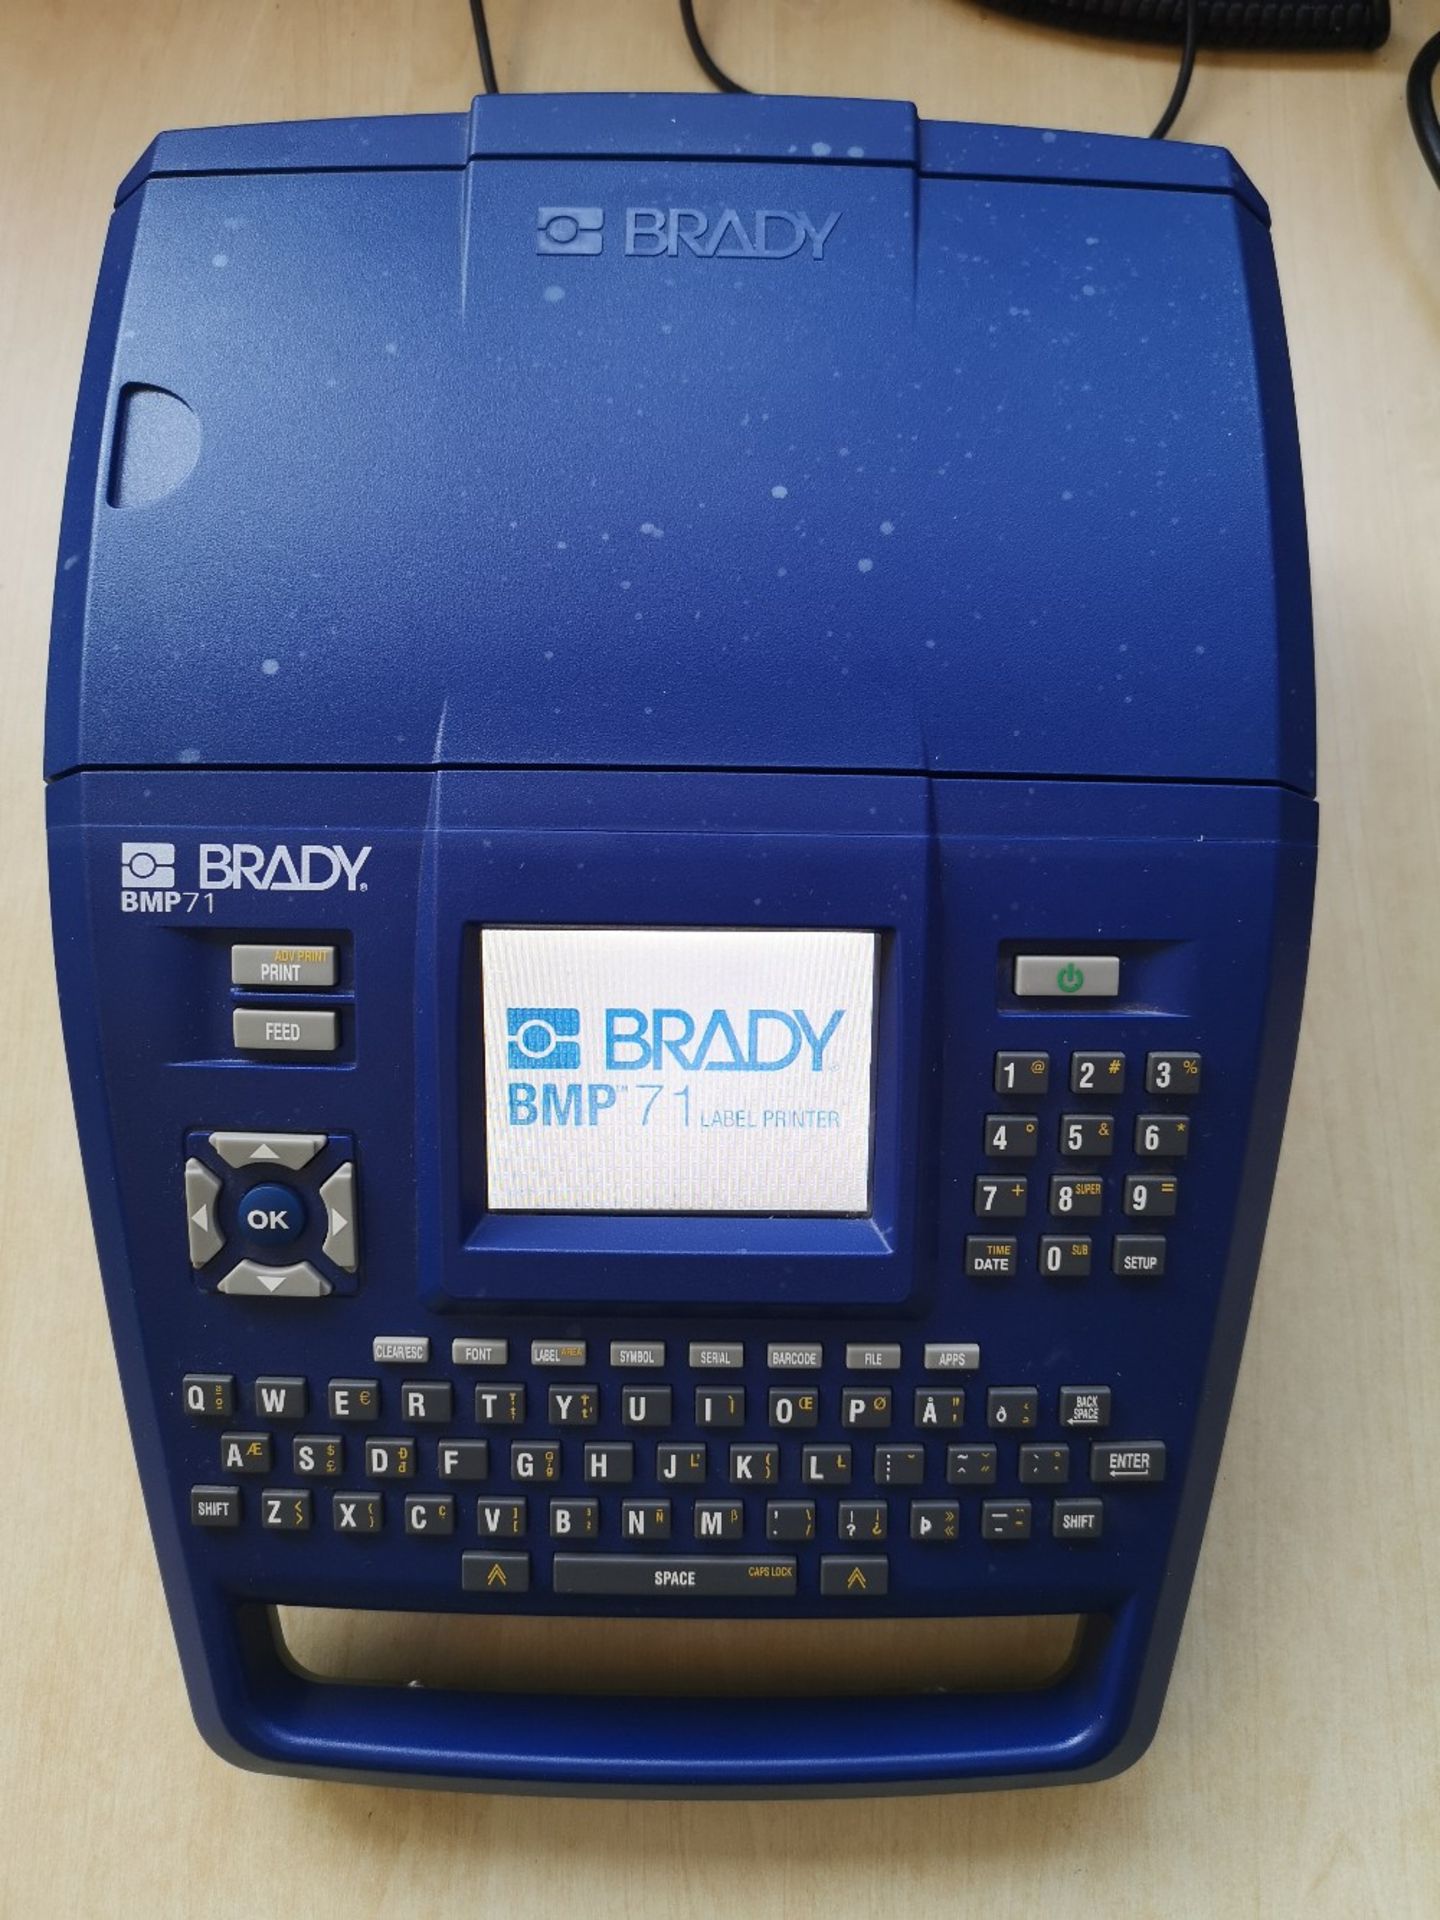 Brady BMP71 Thermal Transfer Label Printer - Image 2 of 3